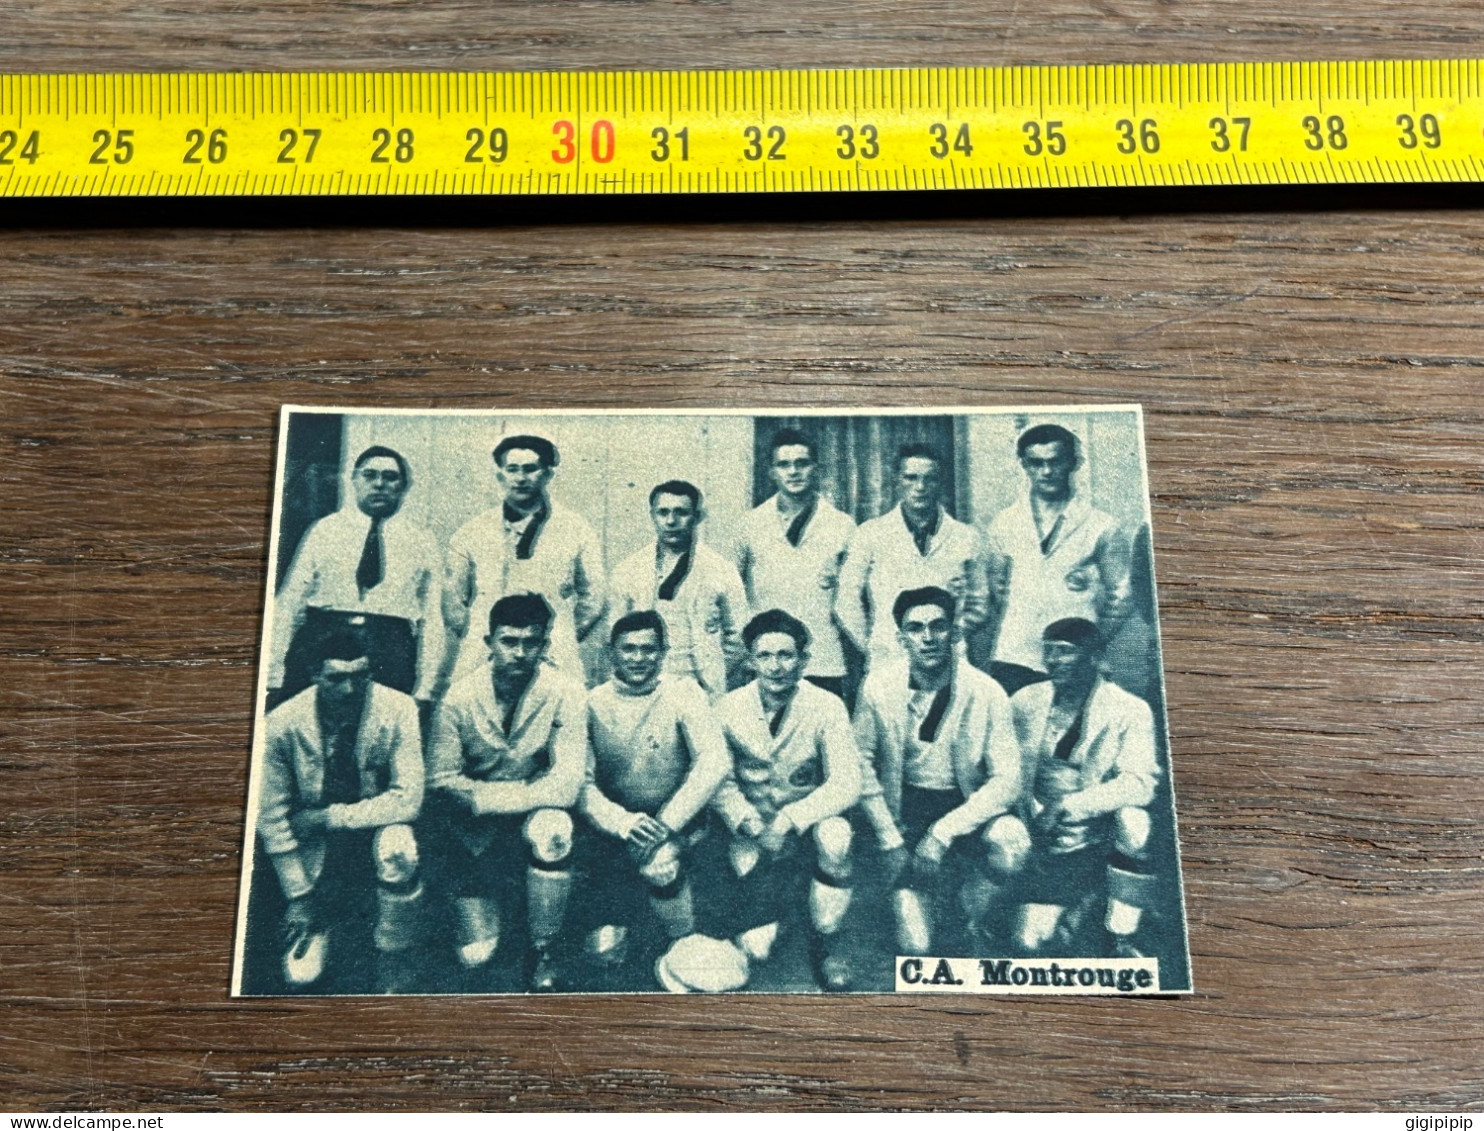 1928 MI équipe Football C.A. Montrouge - Sammlungen